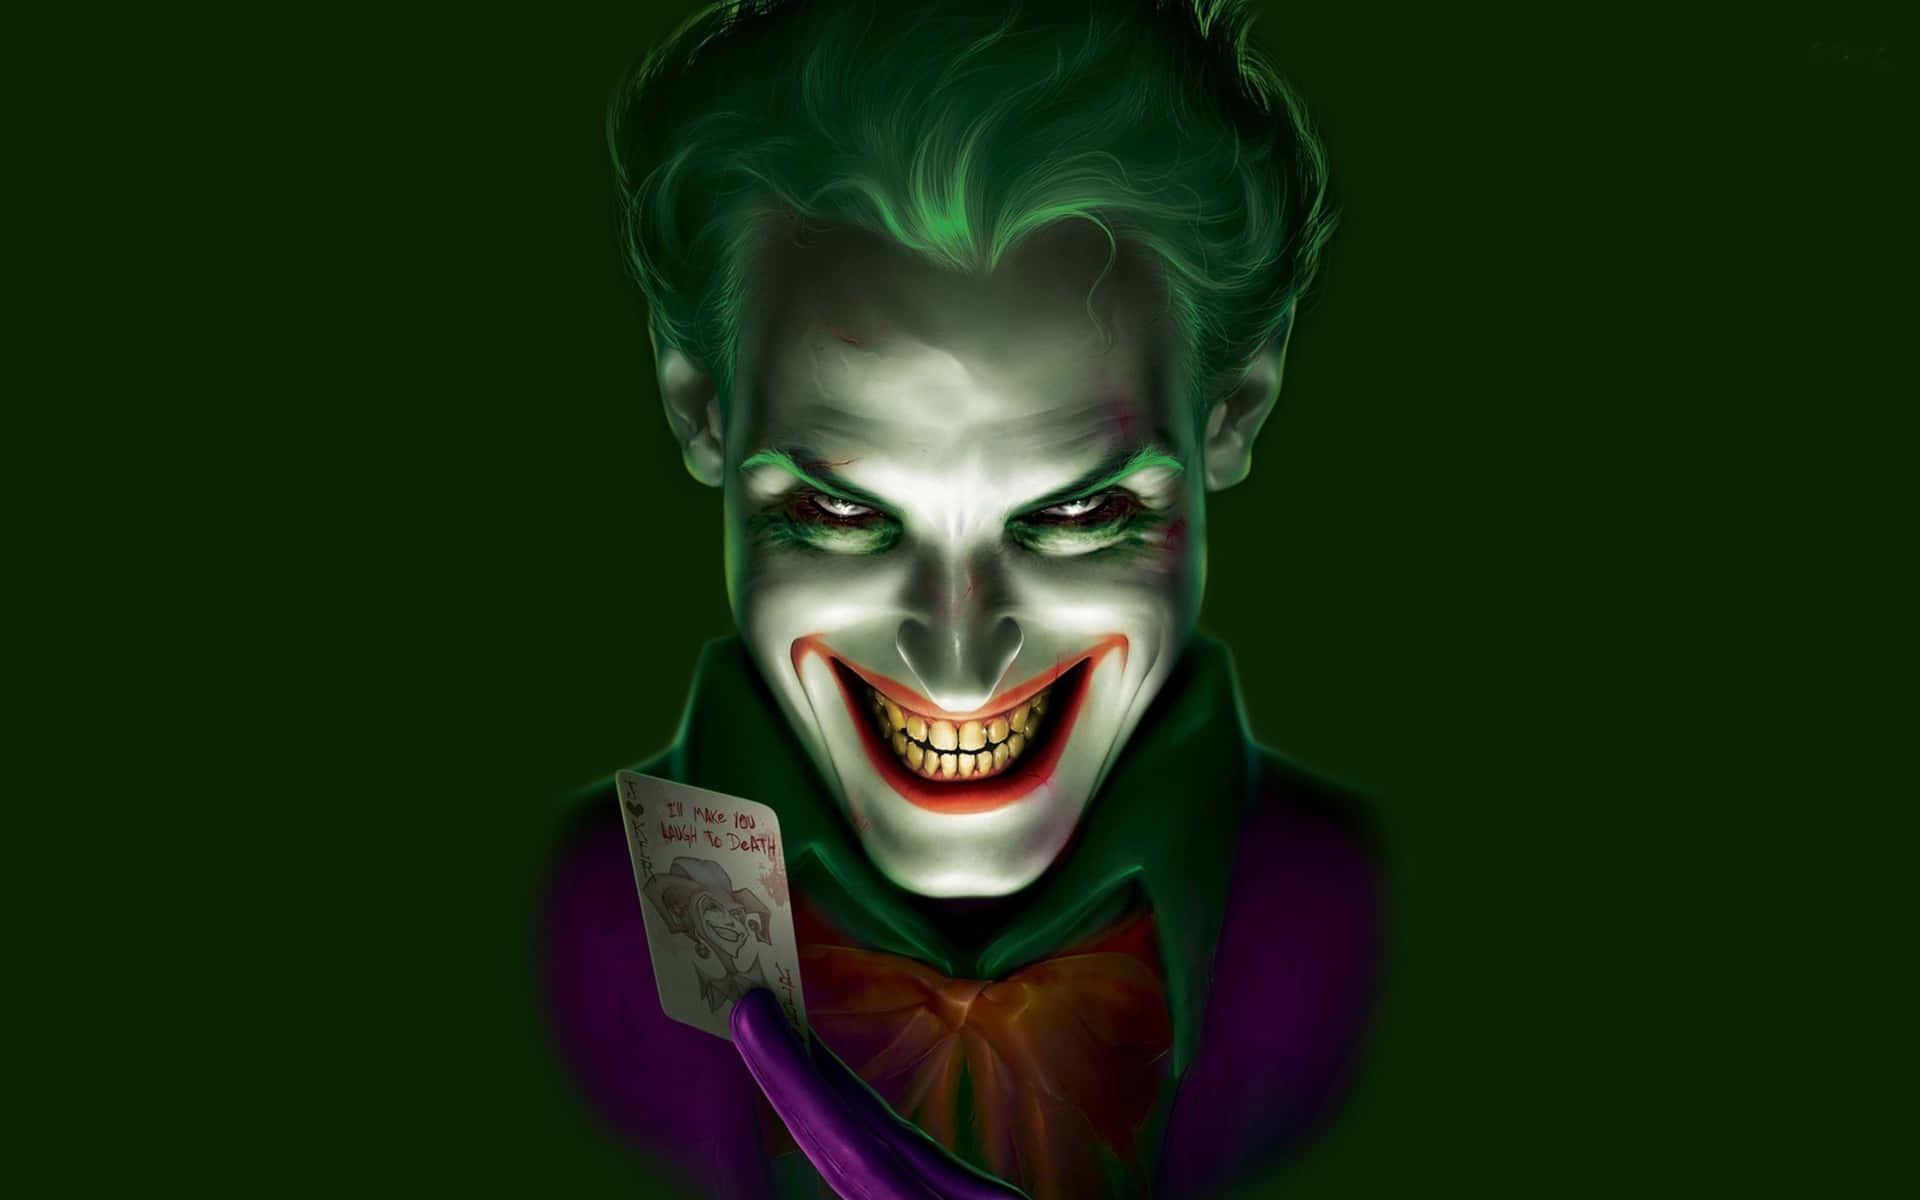 Menacing Figure In Green, The Dangerous Joker